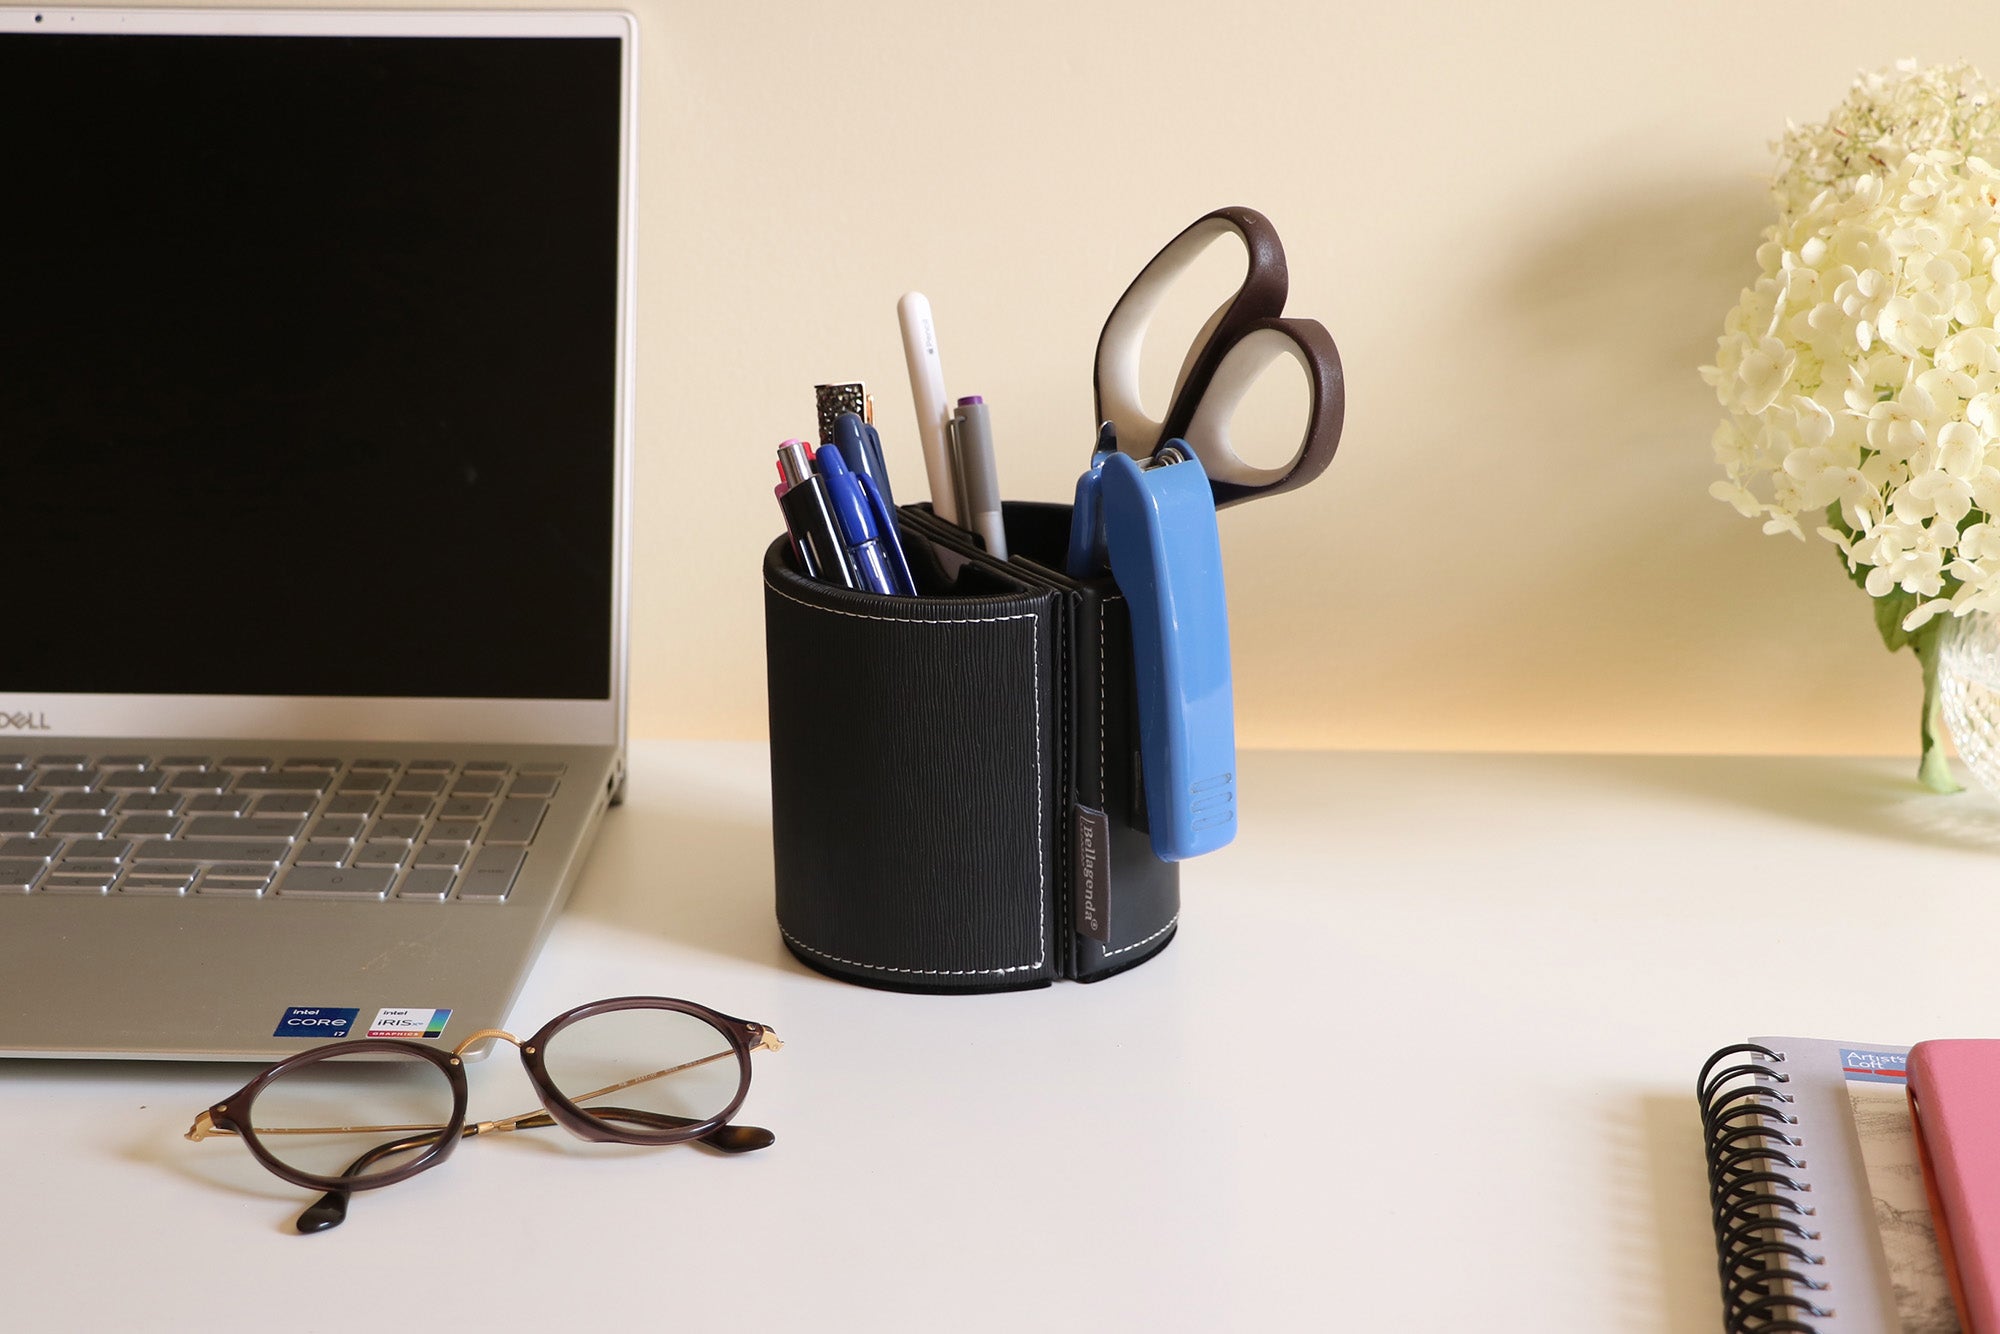 Pen Holder with Photo Frames, Pencil Cup, Desk Organizer – Bellagenda Gifts